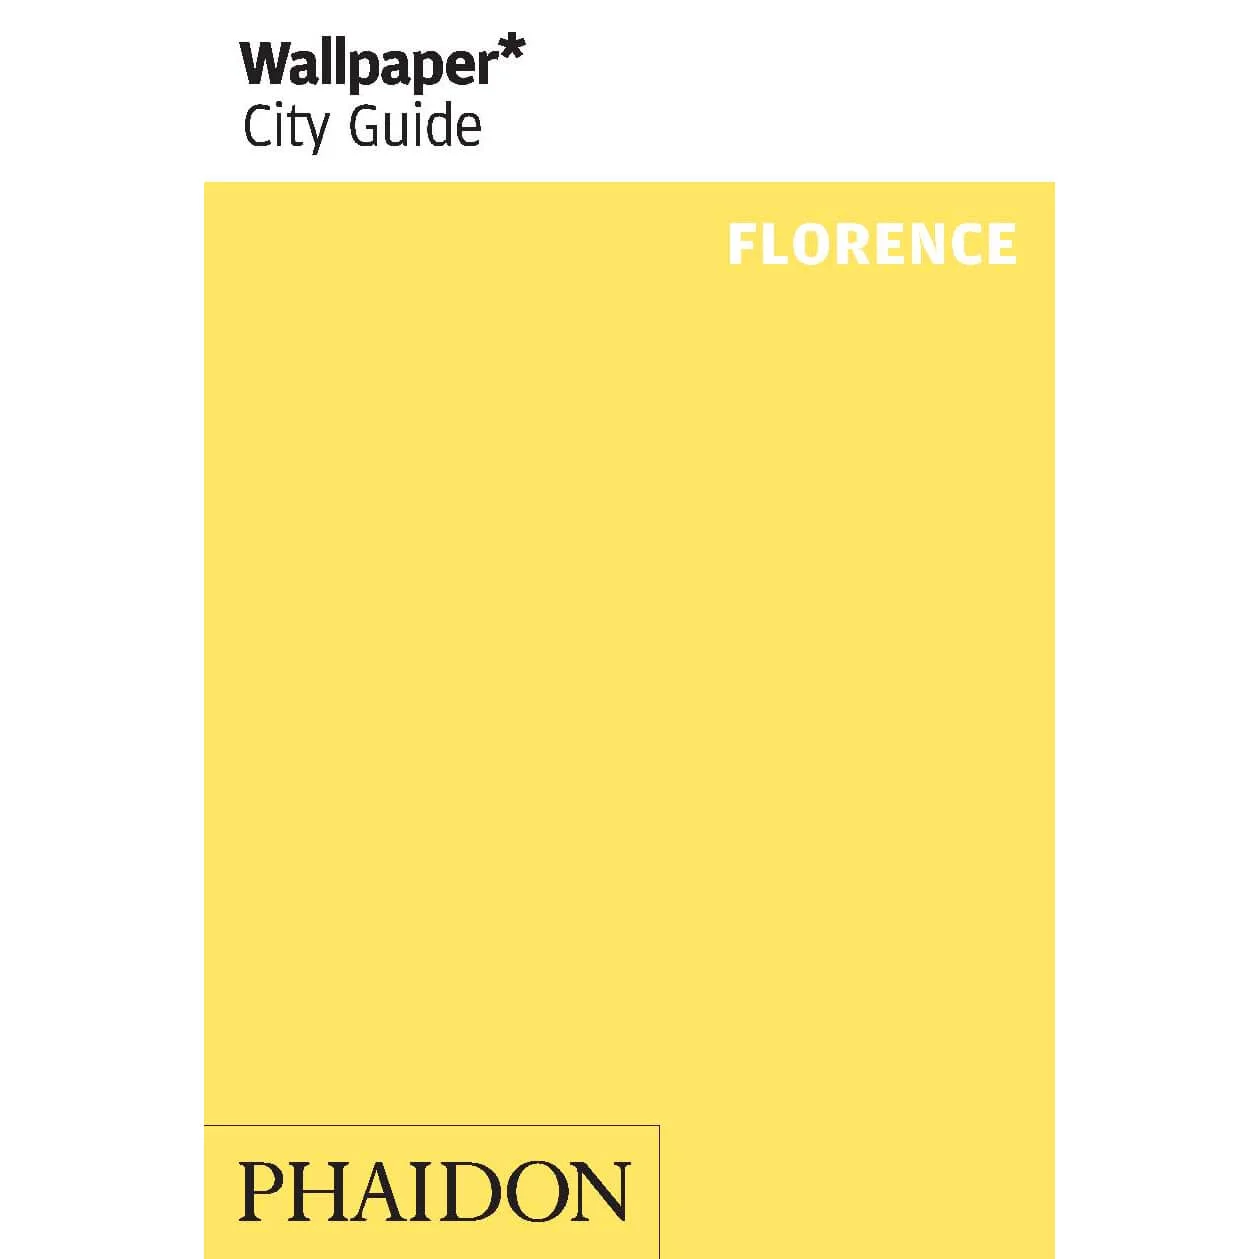 Phaidon: Wallpaper* City Guide - Florence Image 1